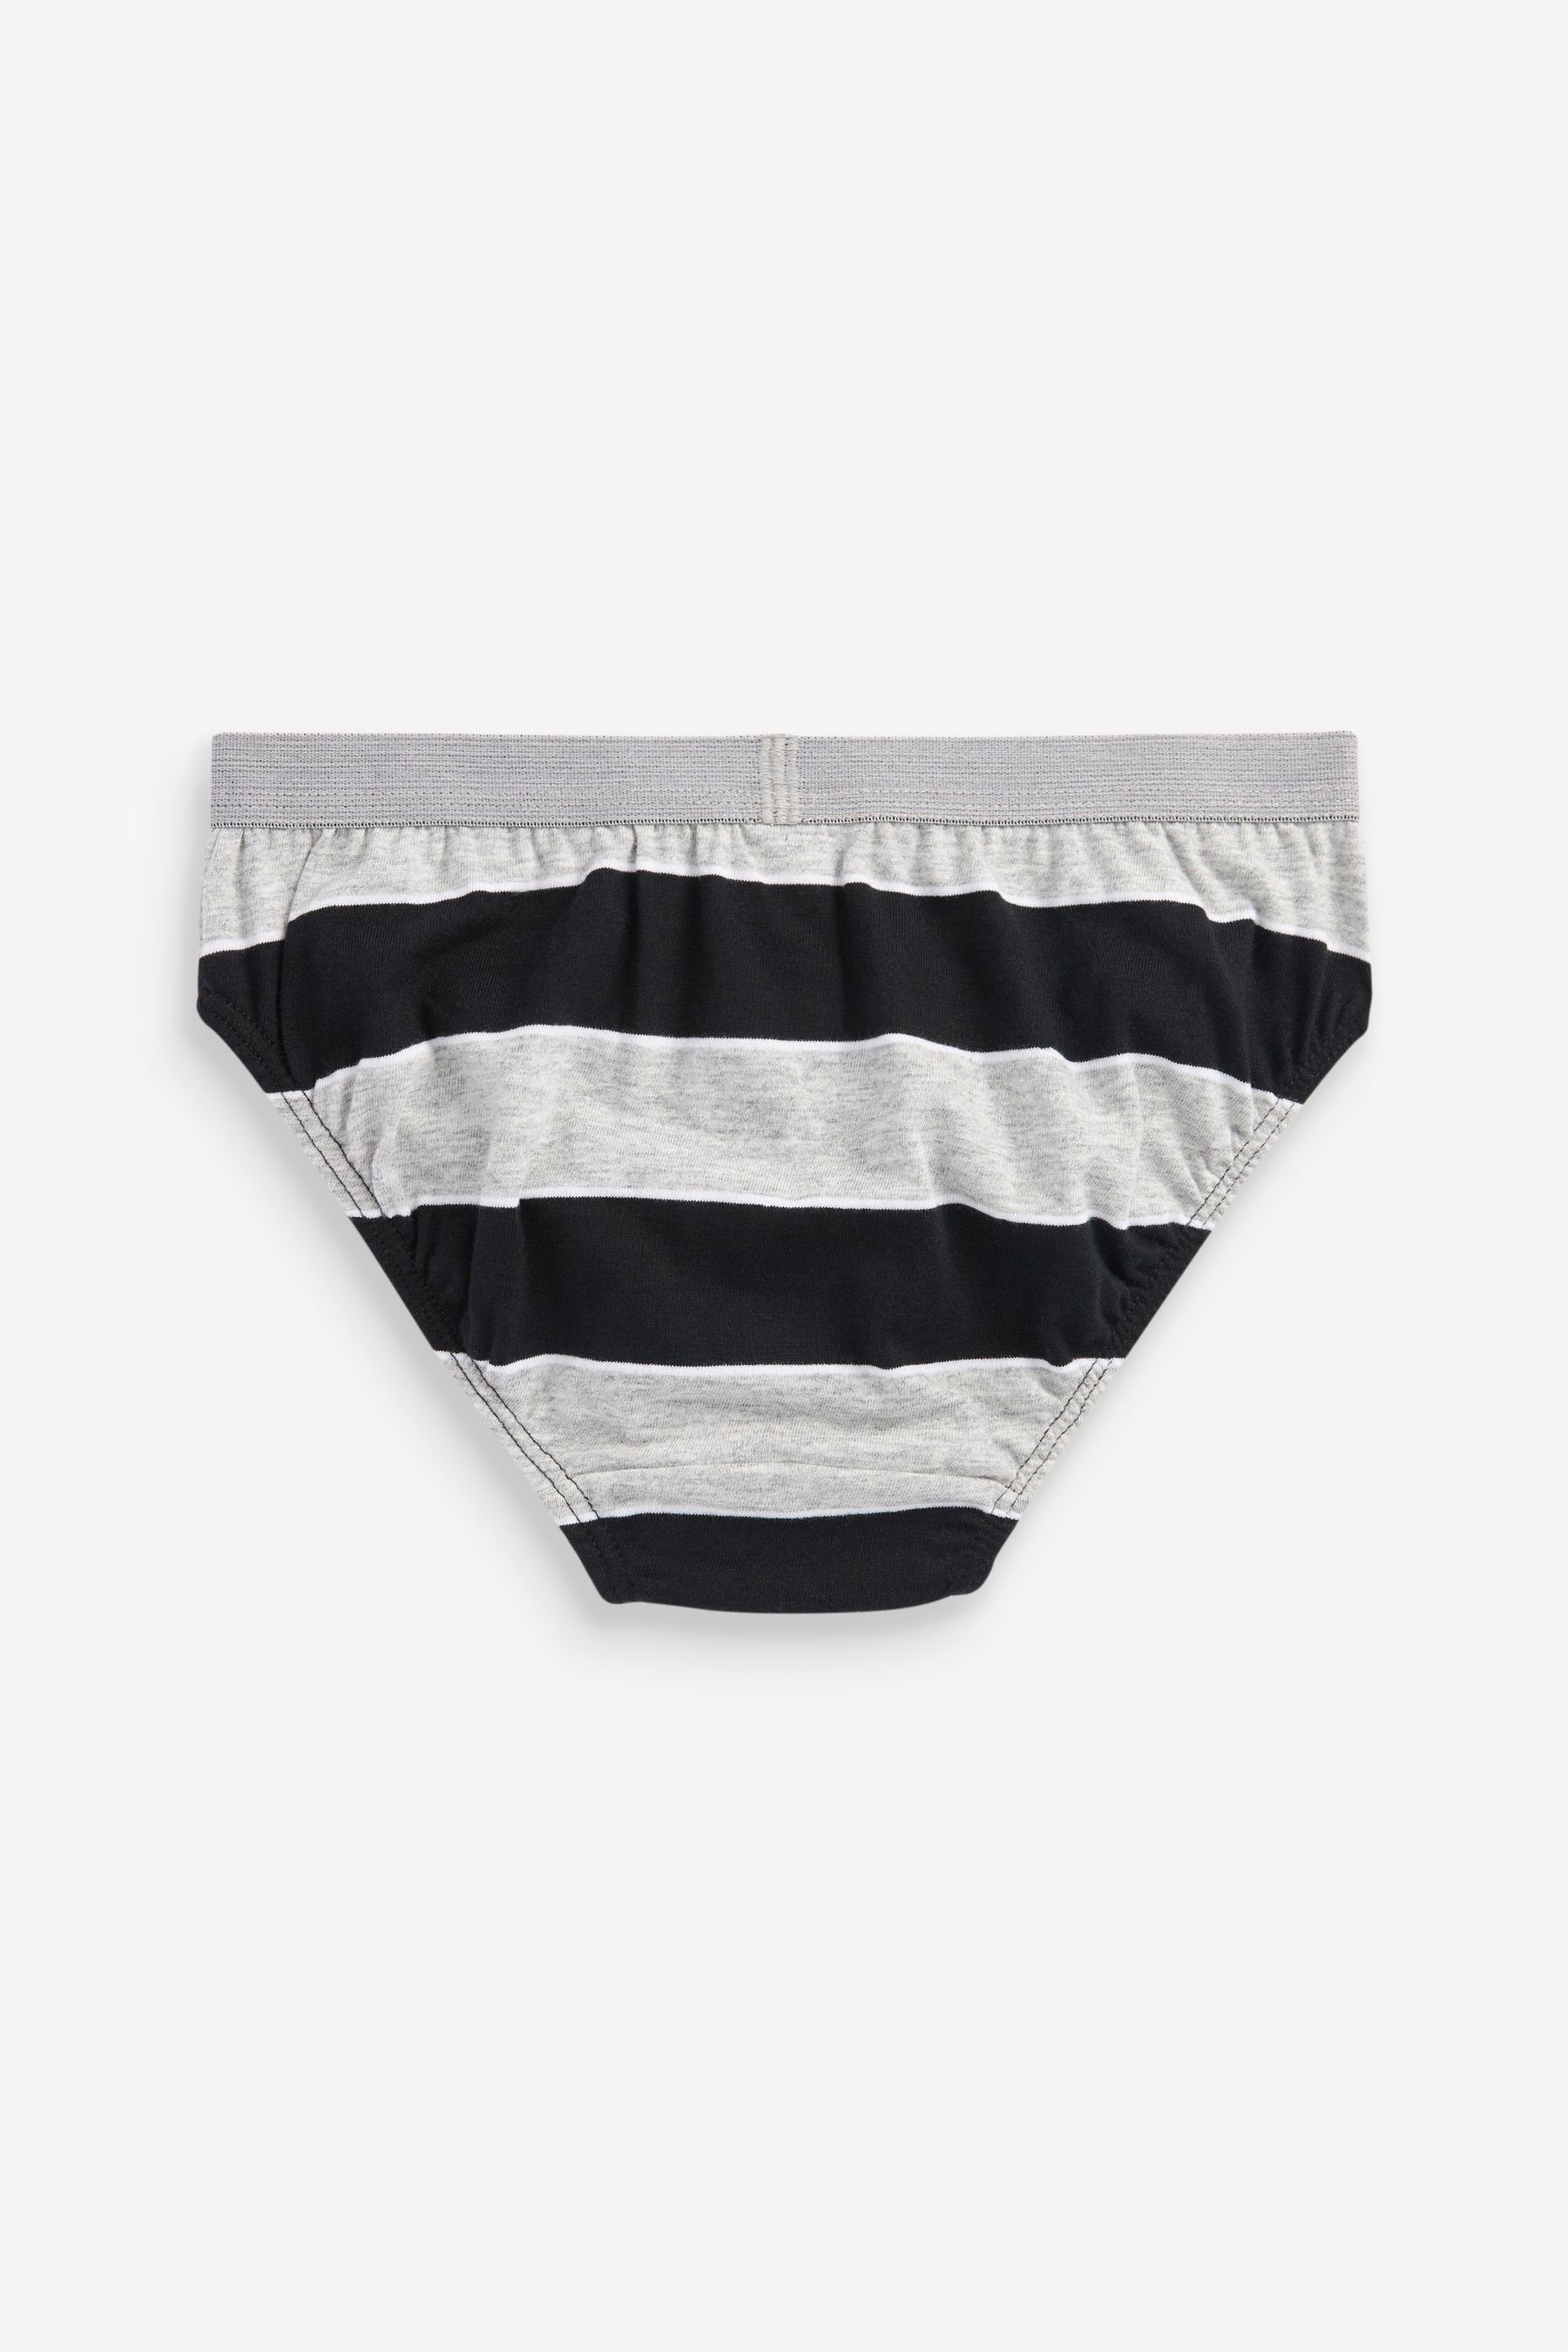 (5-St) im Slip Unterhosen Next Stripe Black/White/Grey 5er-Pack